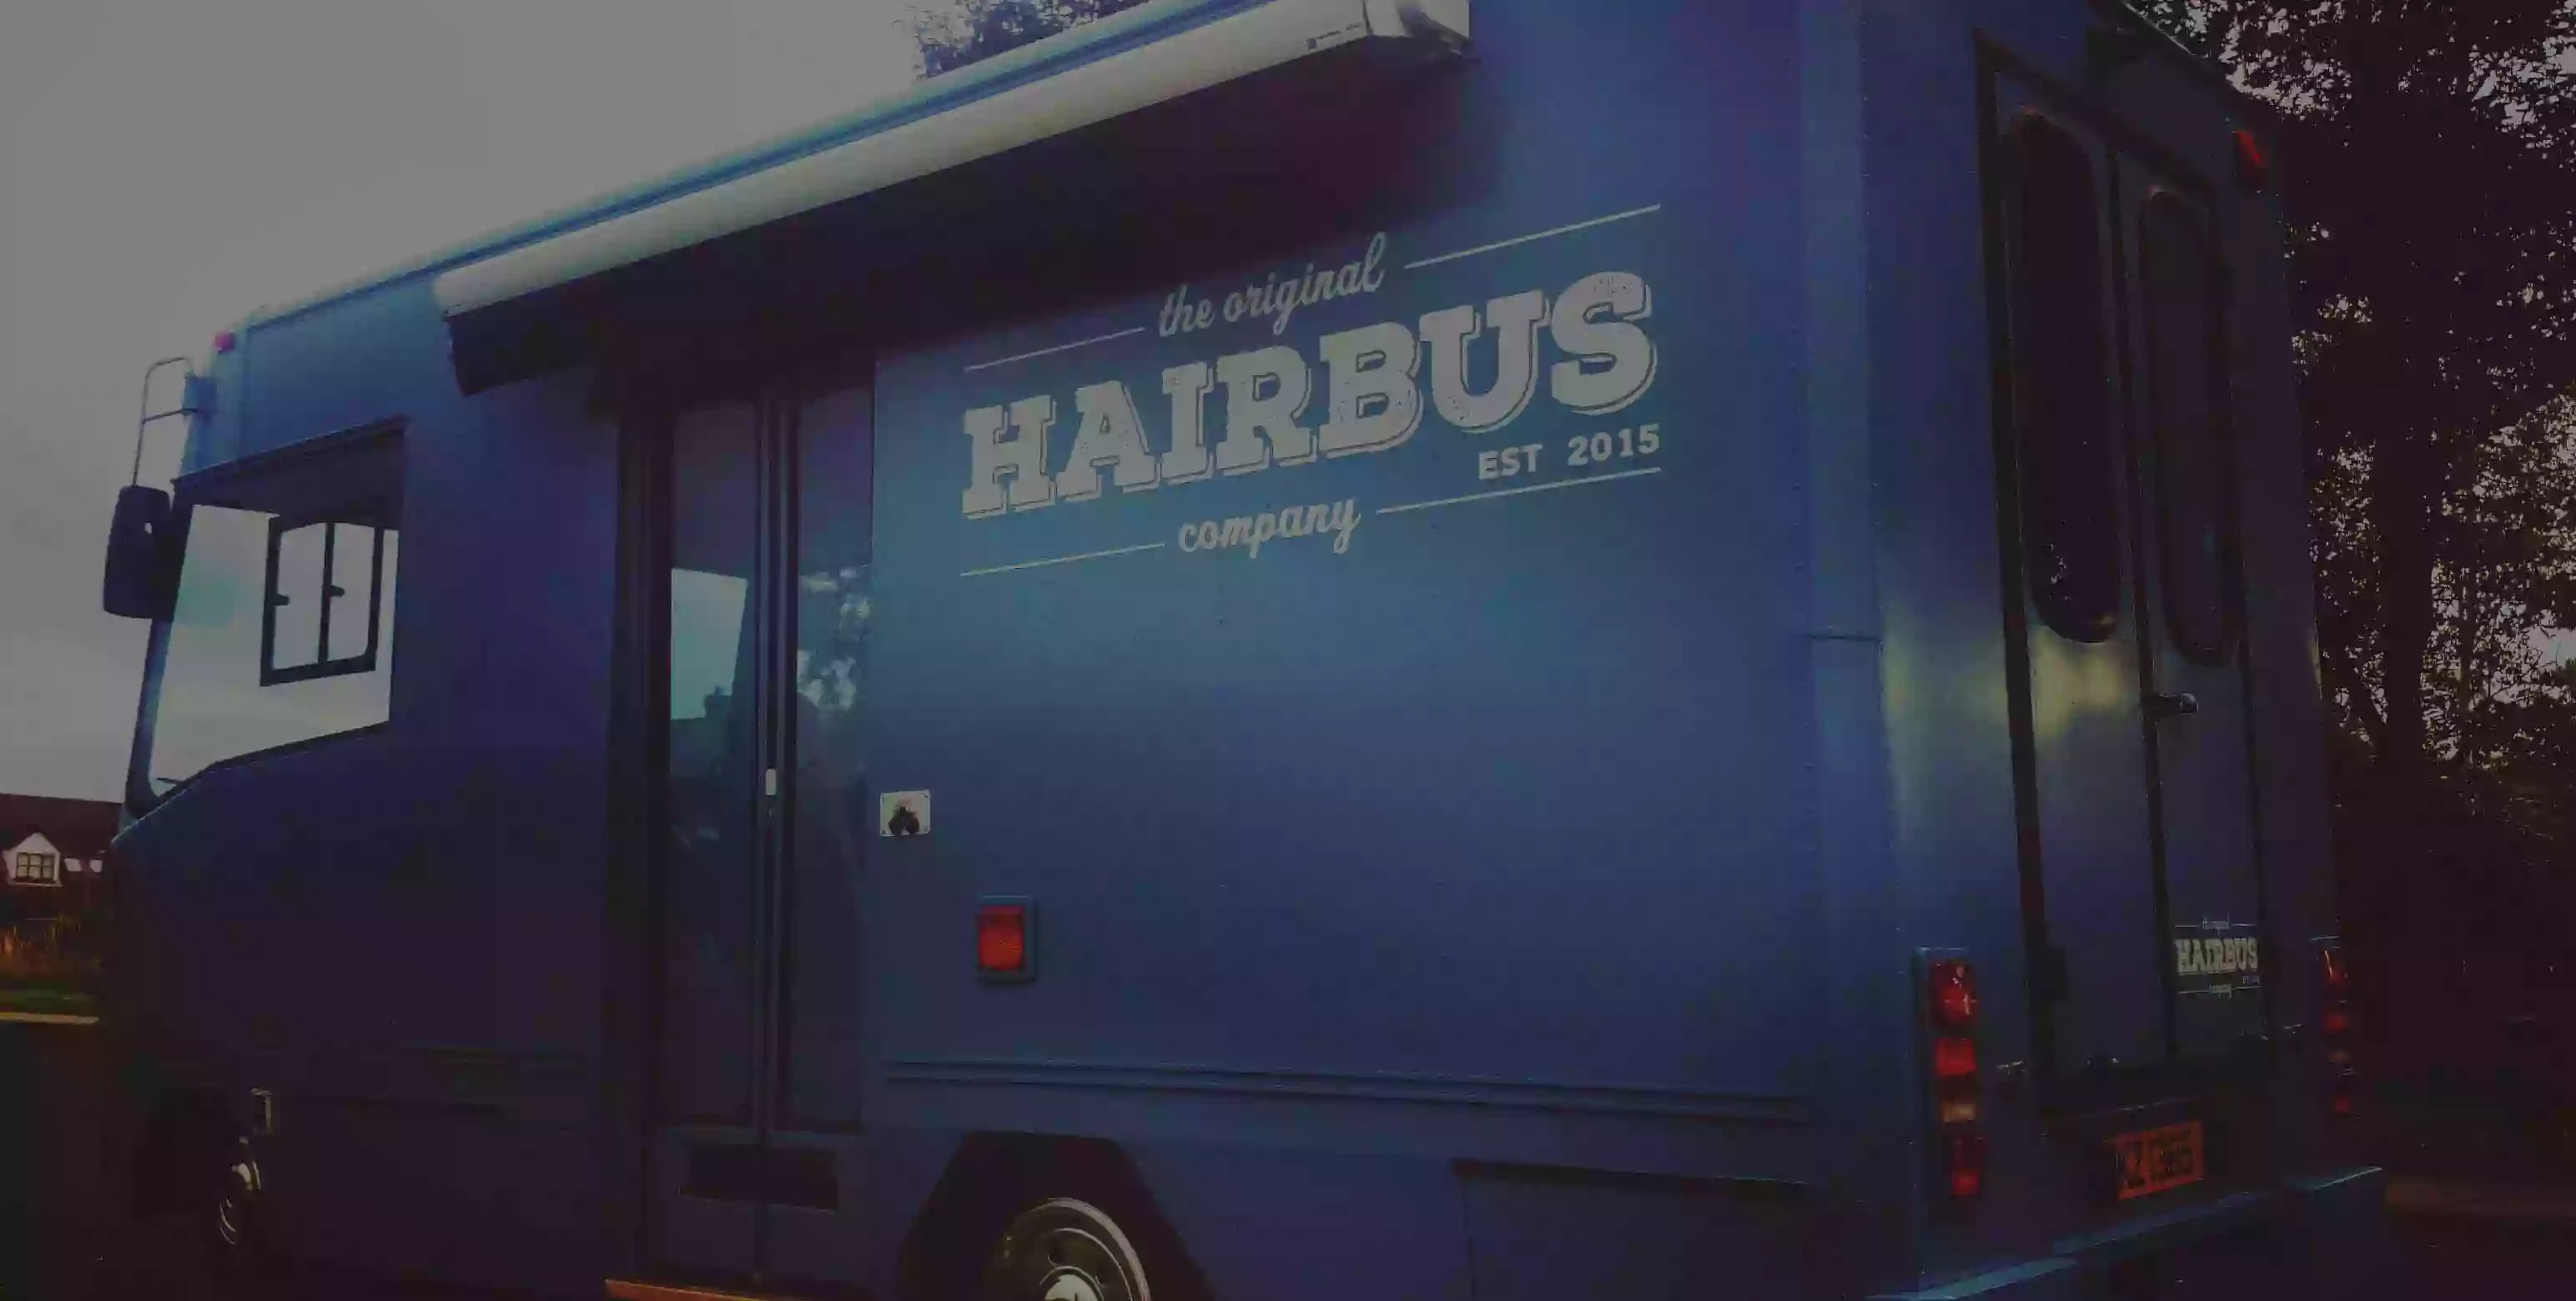 The Original Hairbus Company